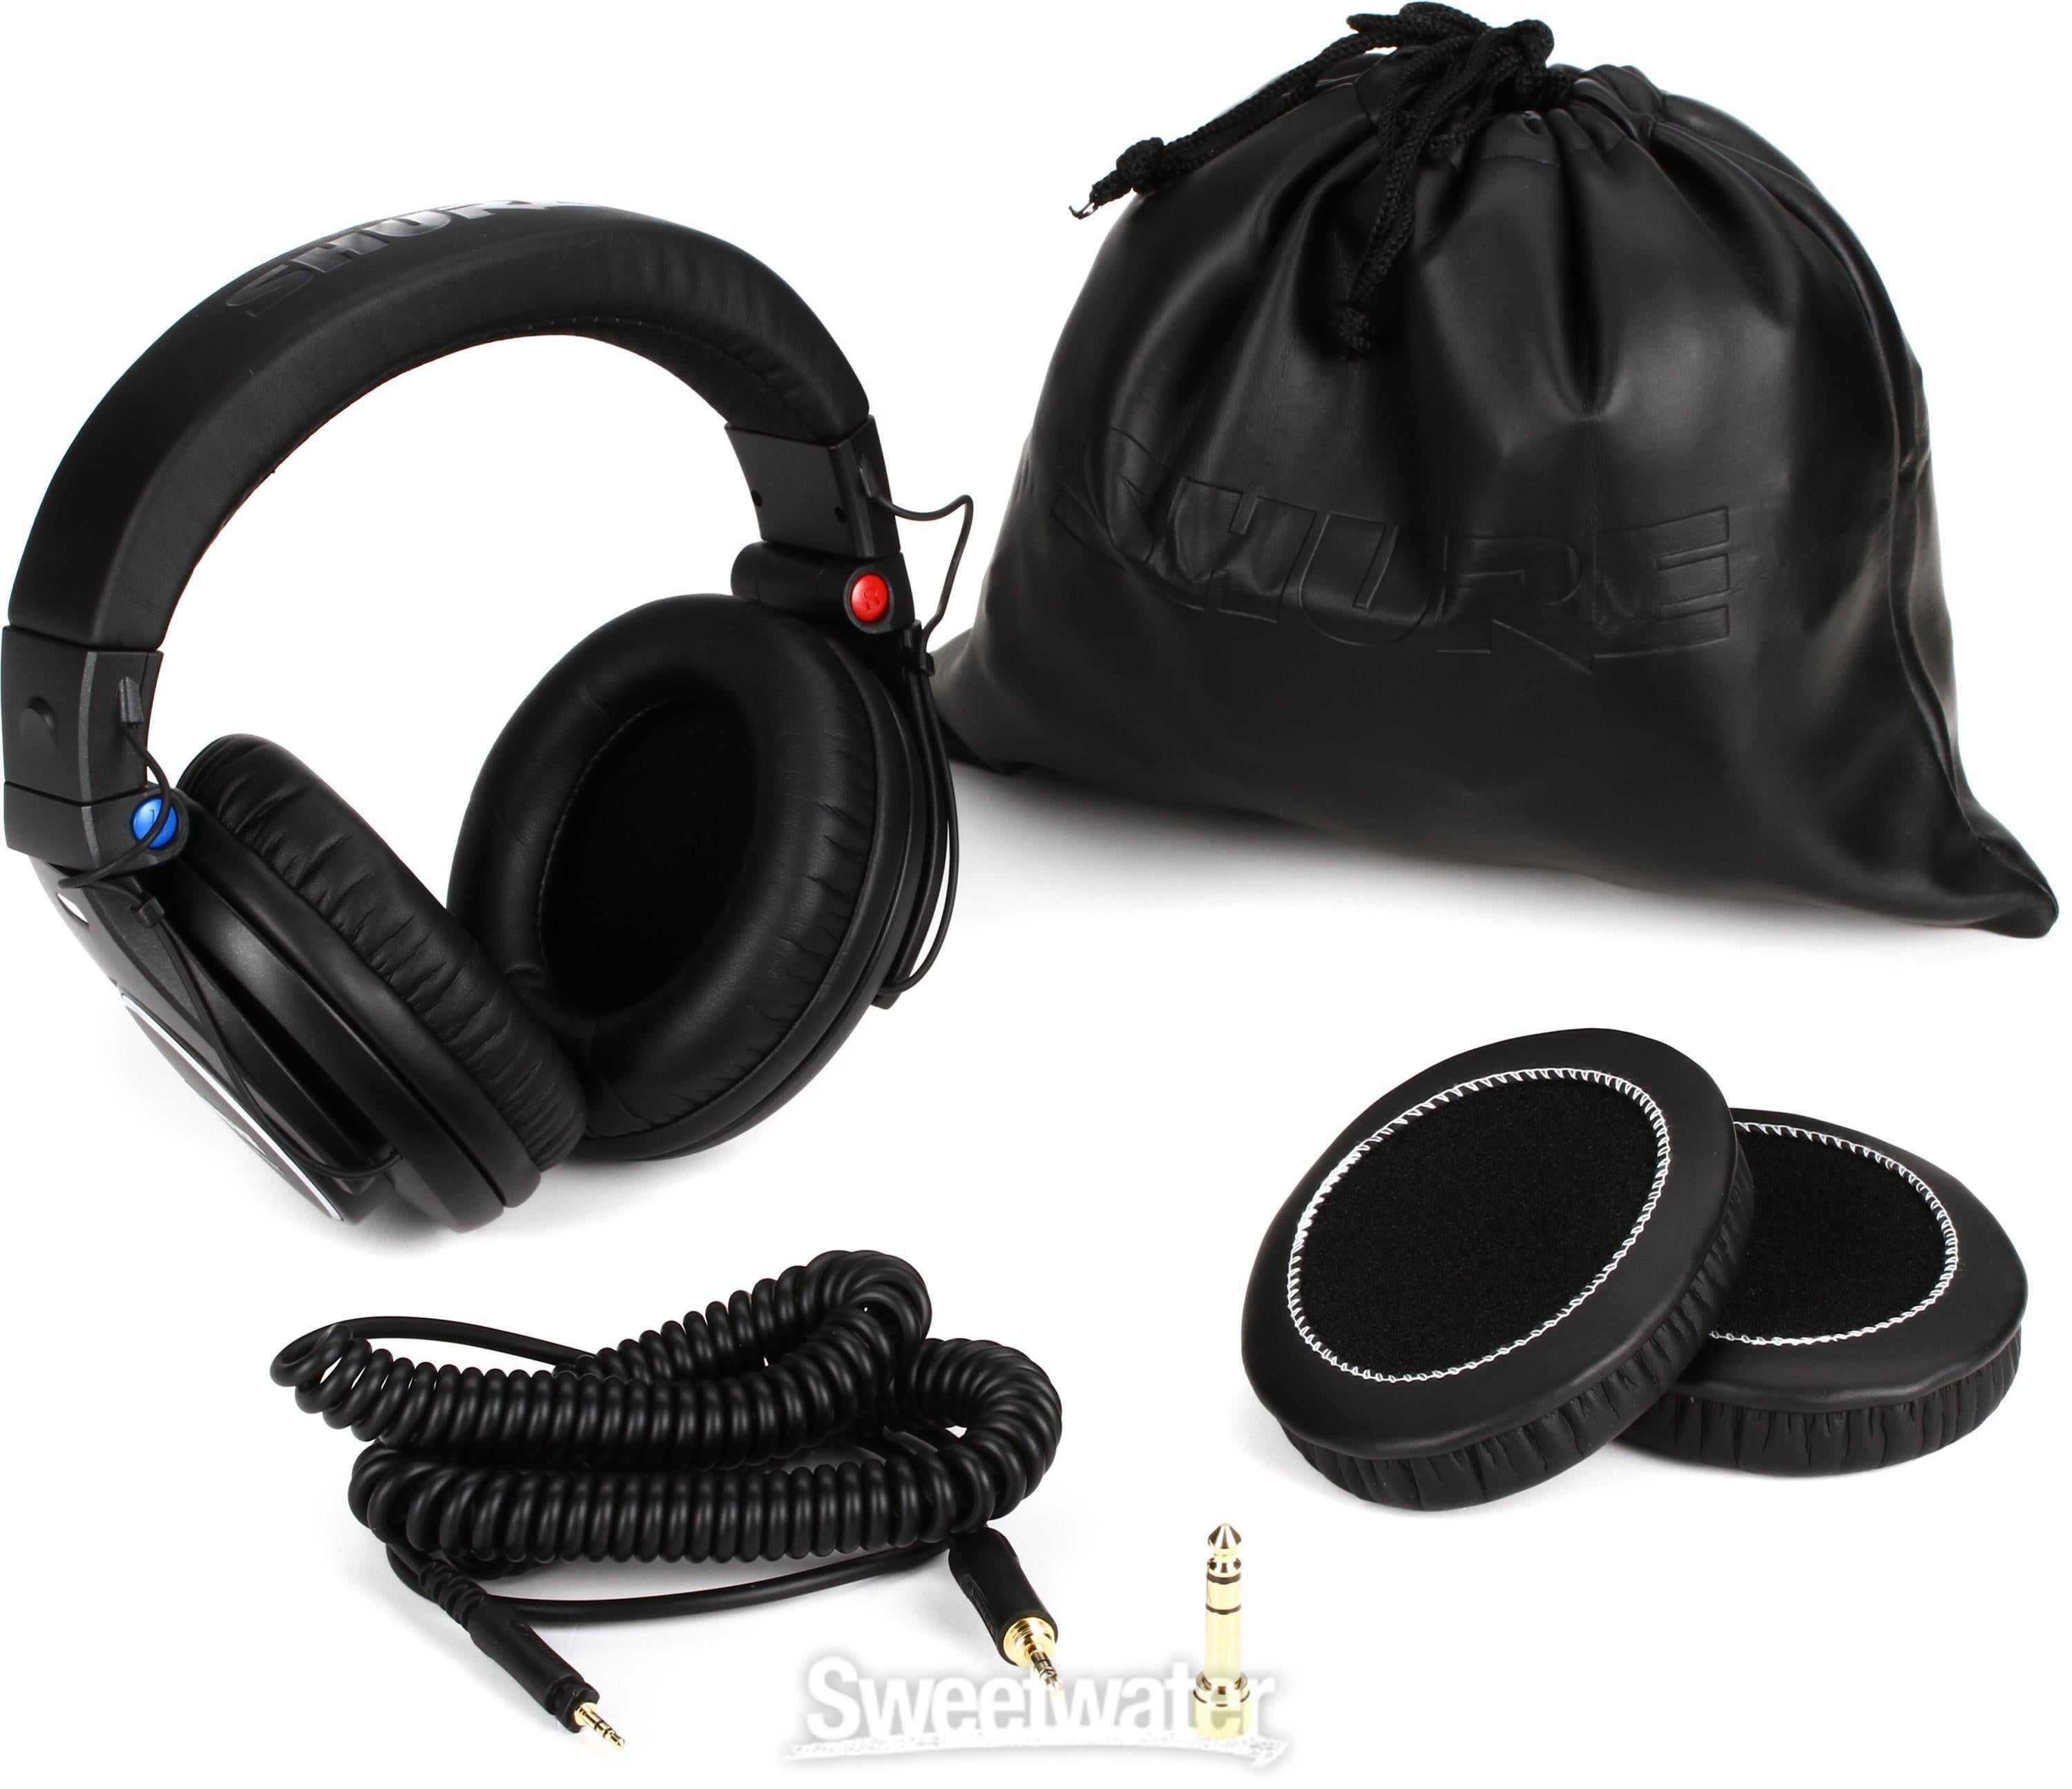 Shure SRH840 Closed-back Pro Studio Monitor Headphones Reviews